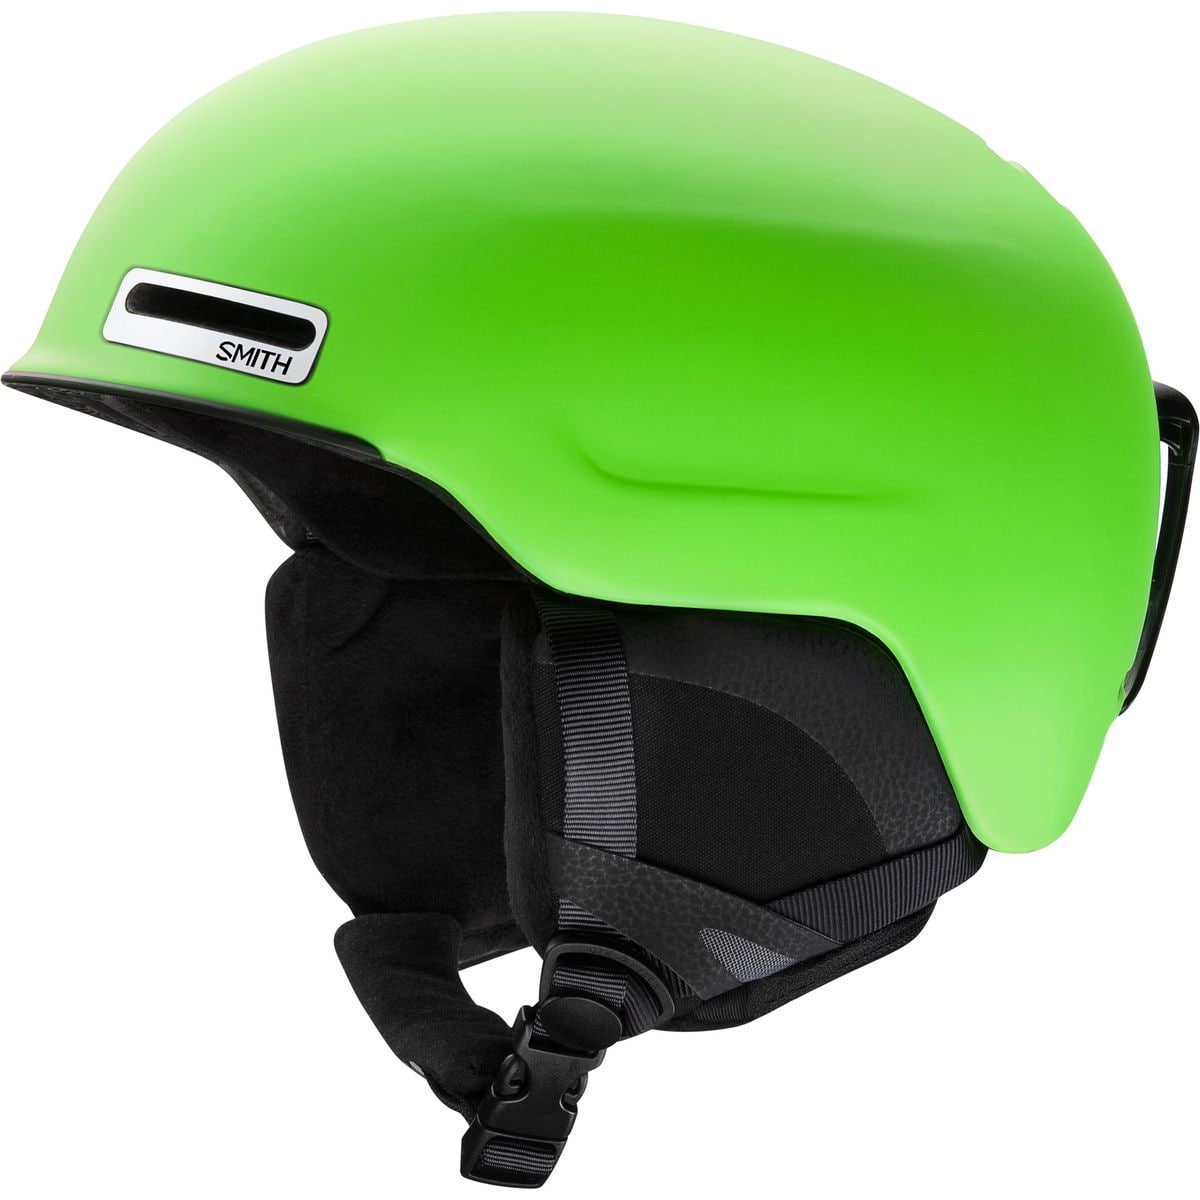 Smith Maze Helmet | eBay